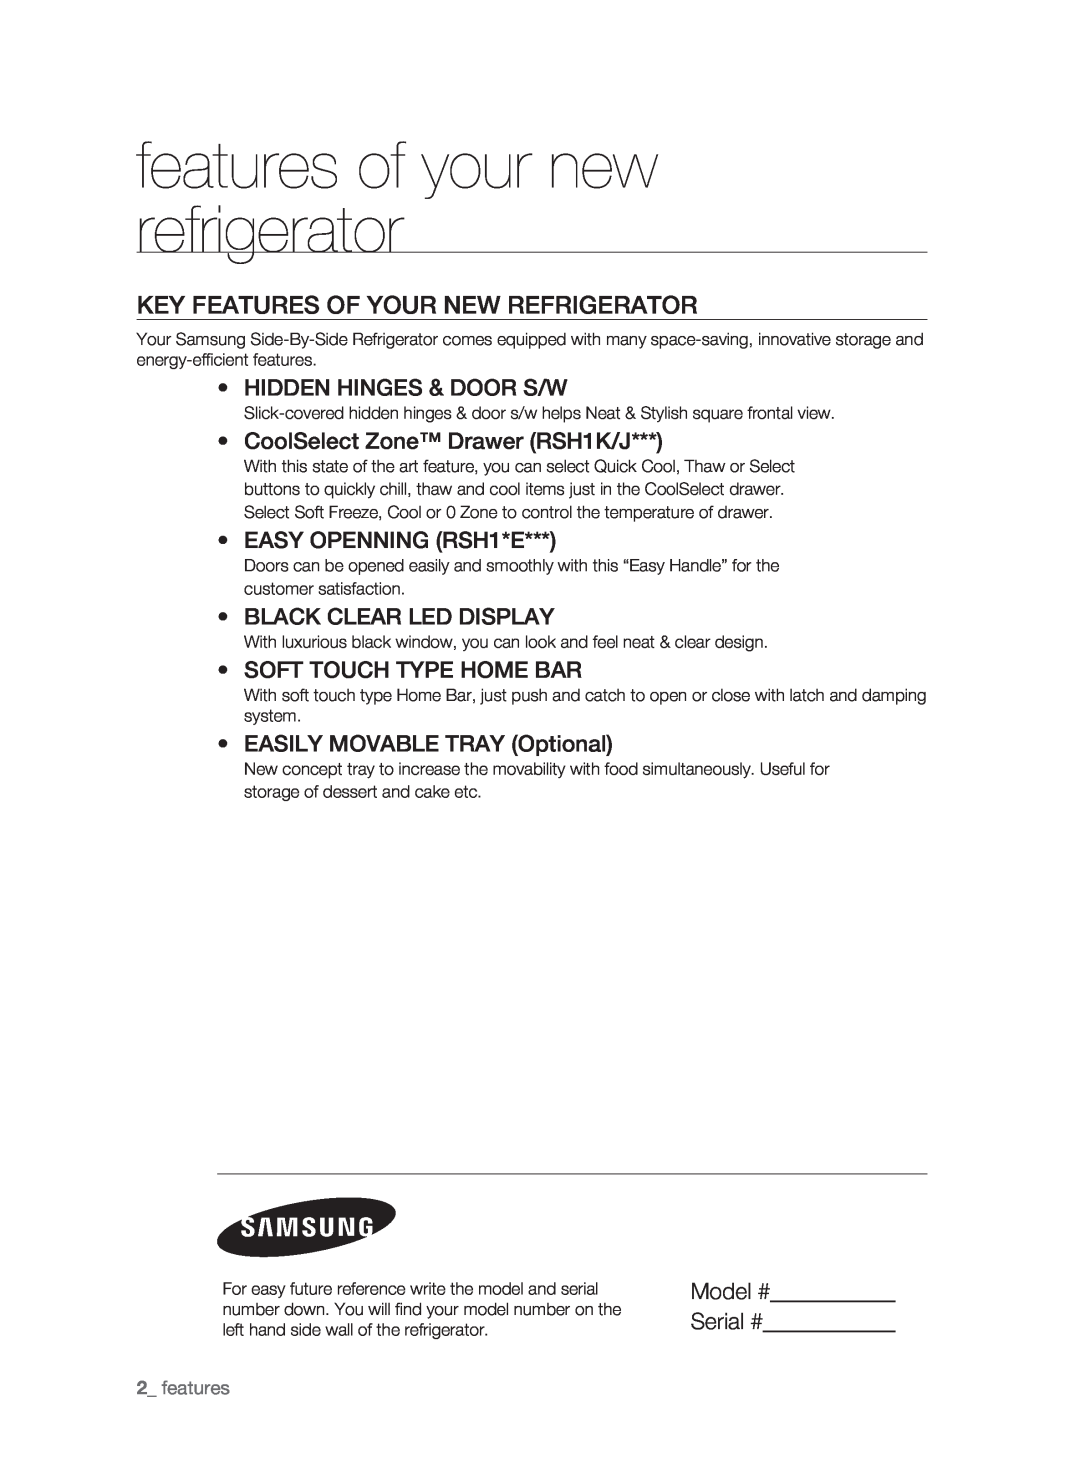 Samsung RSH1J, RSH1N Key features of your new refrigerator, Hidden Hinges & Door S/W, CoolSelect Zone Drawer RSH1K/J 